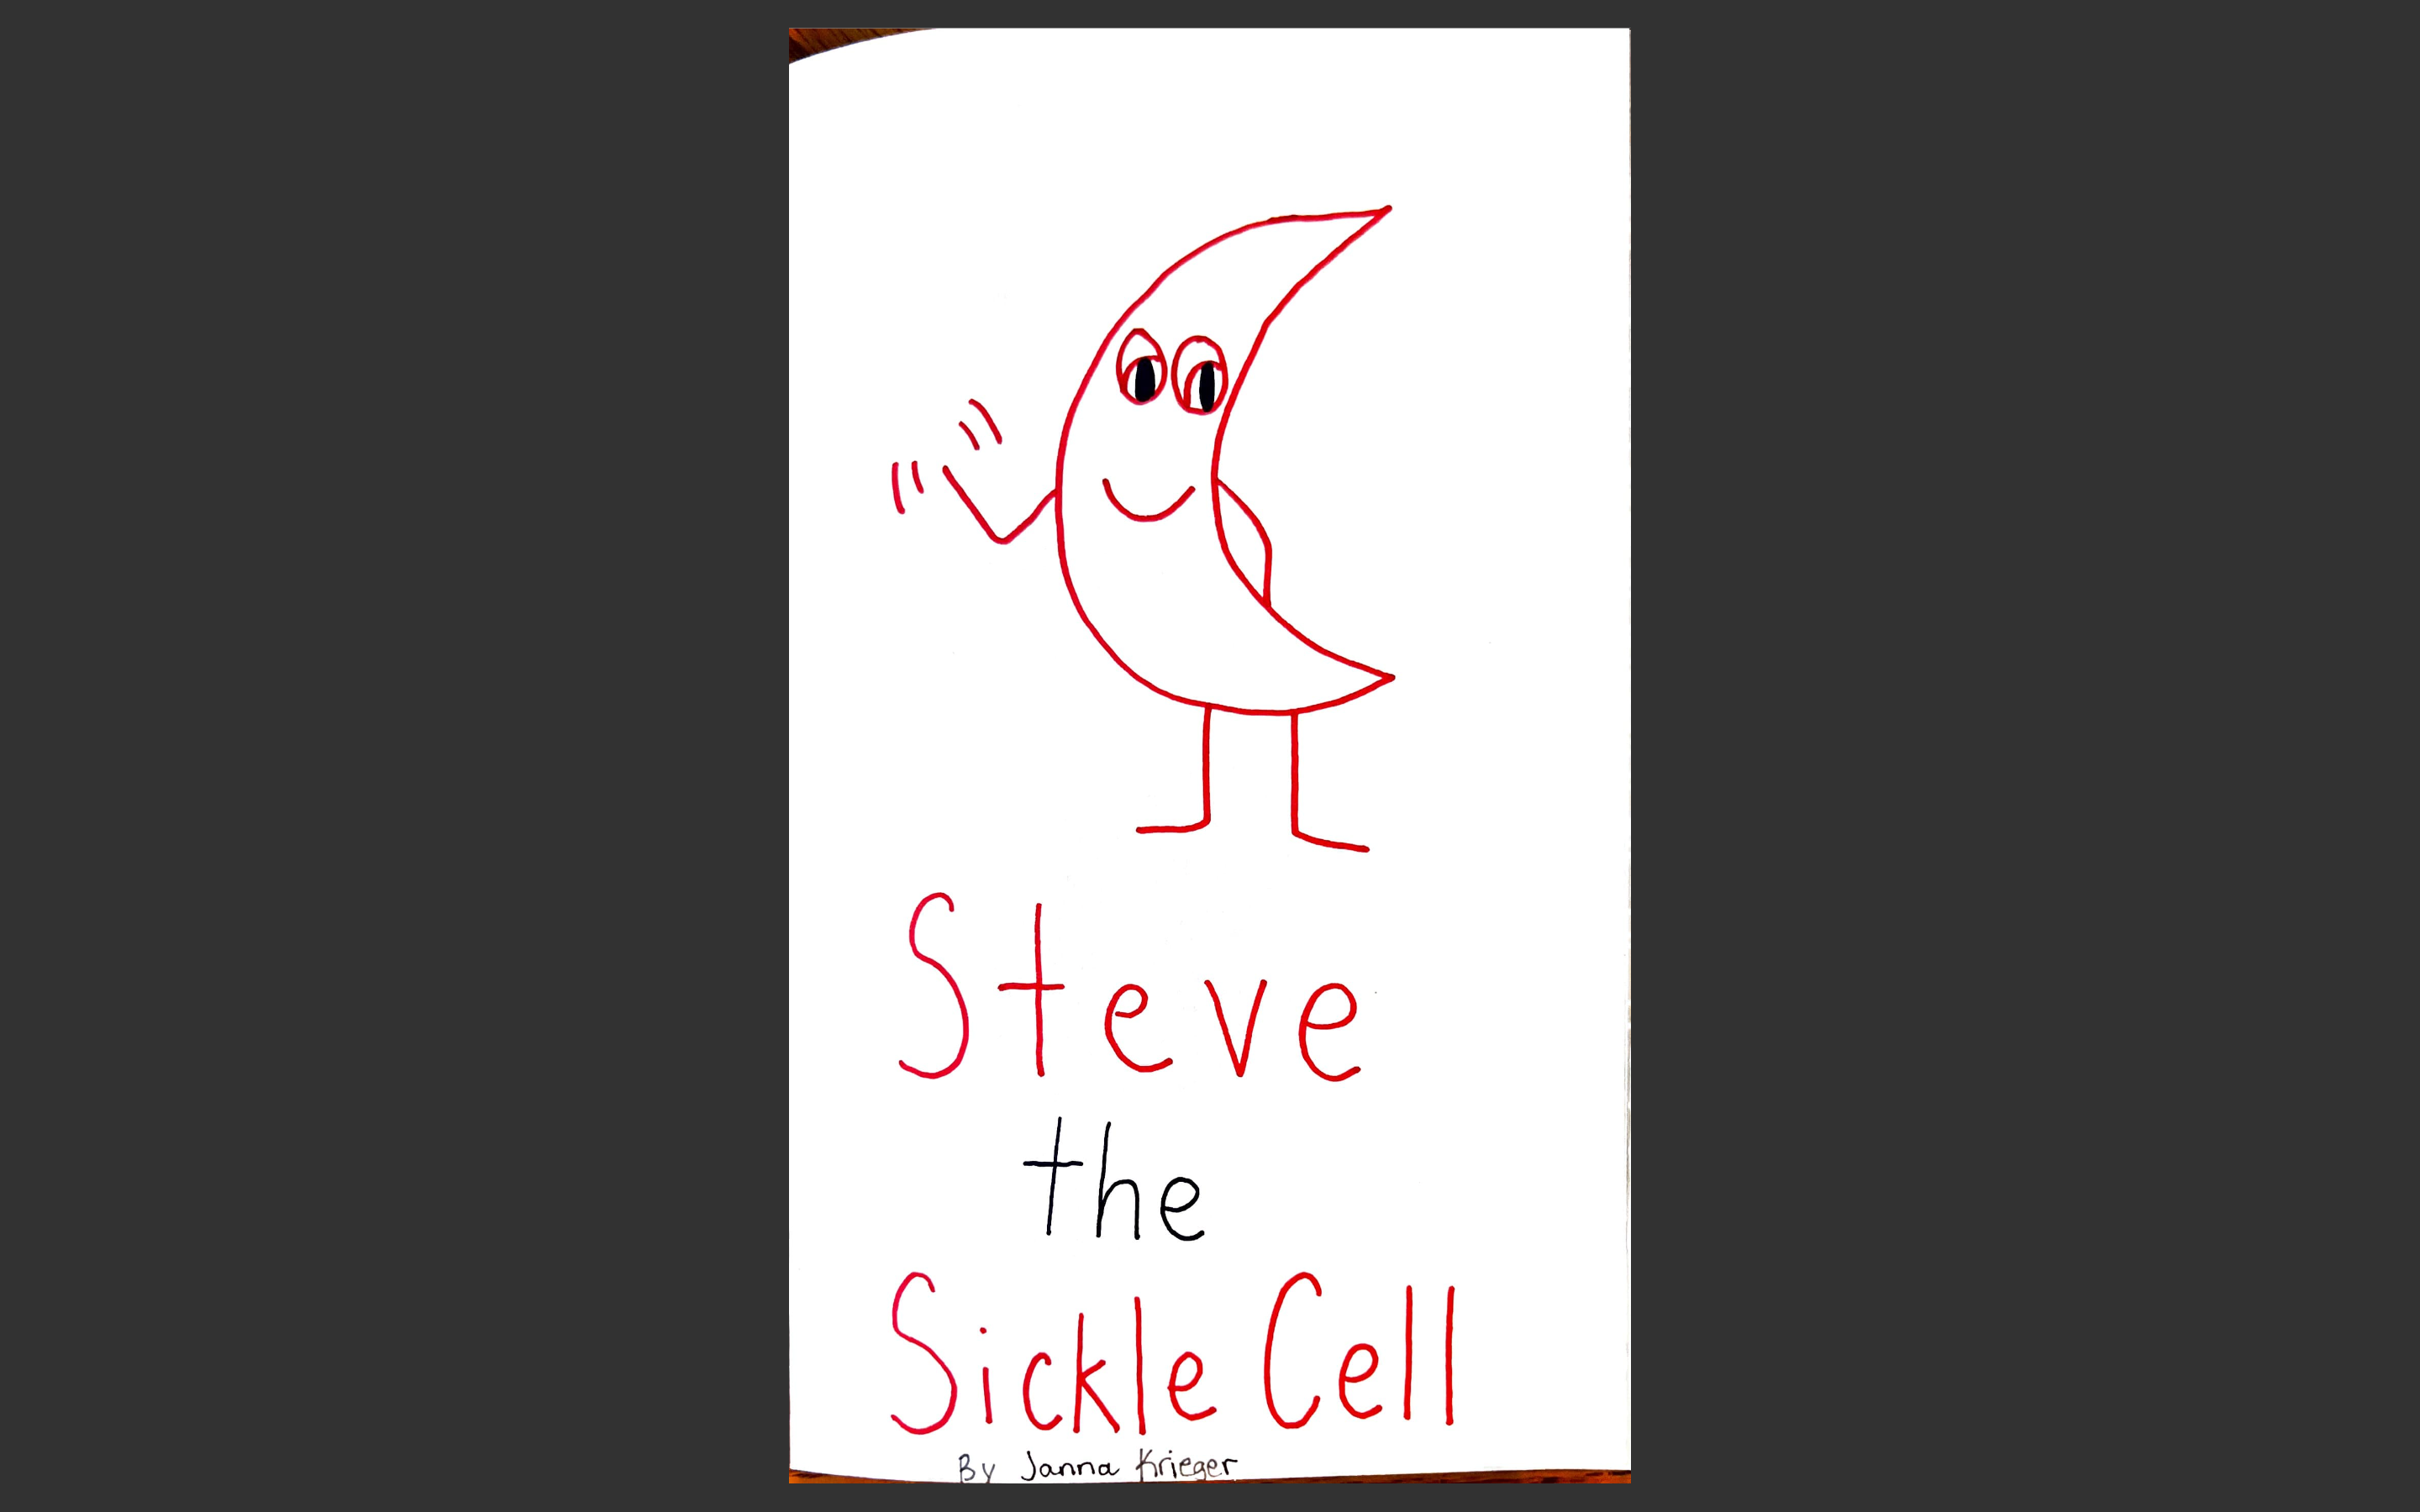 Steve the Sickle Cell